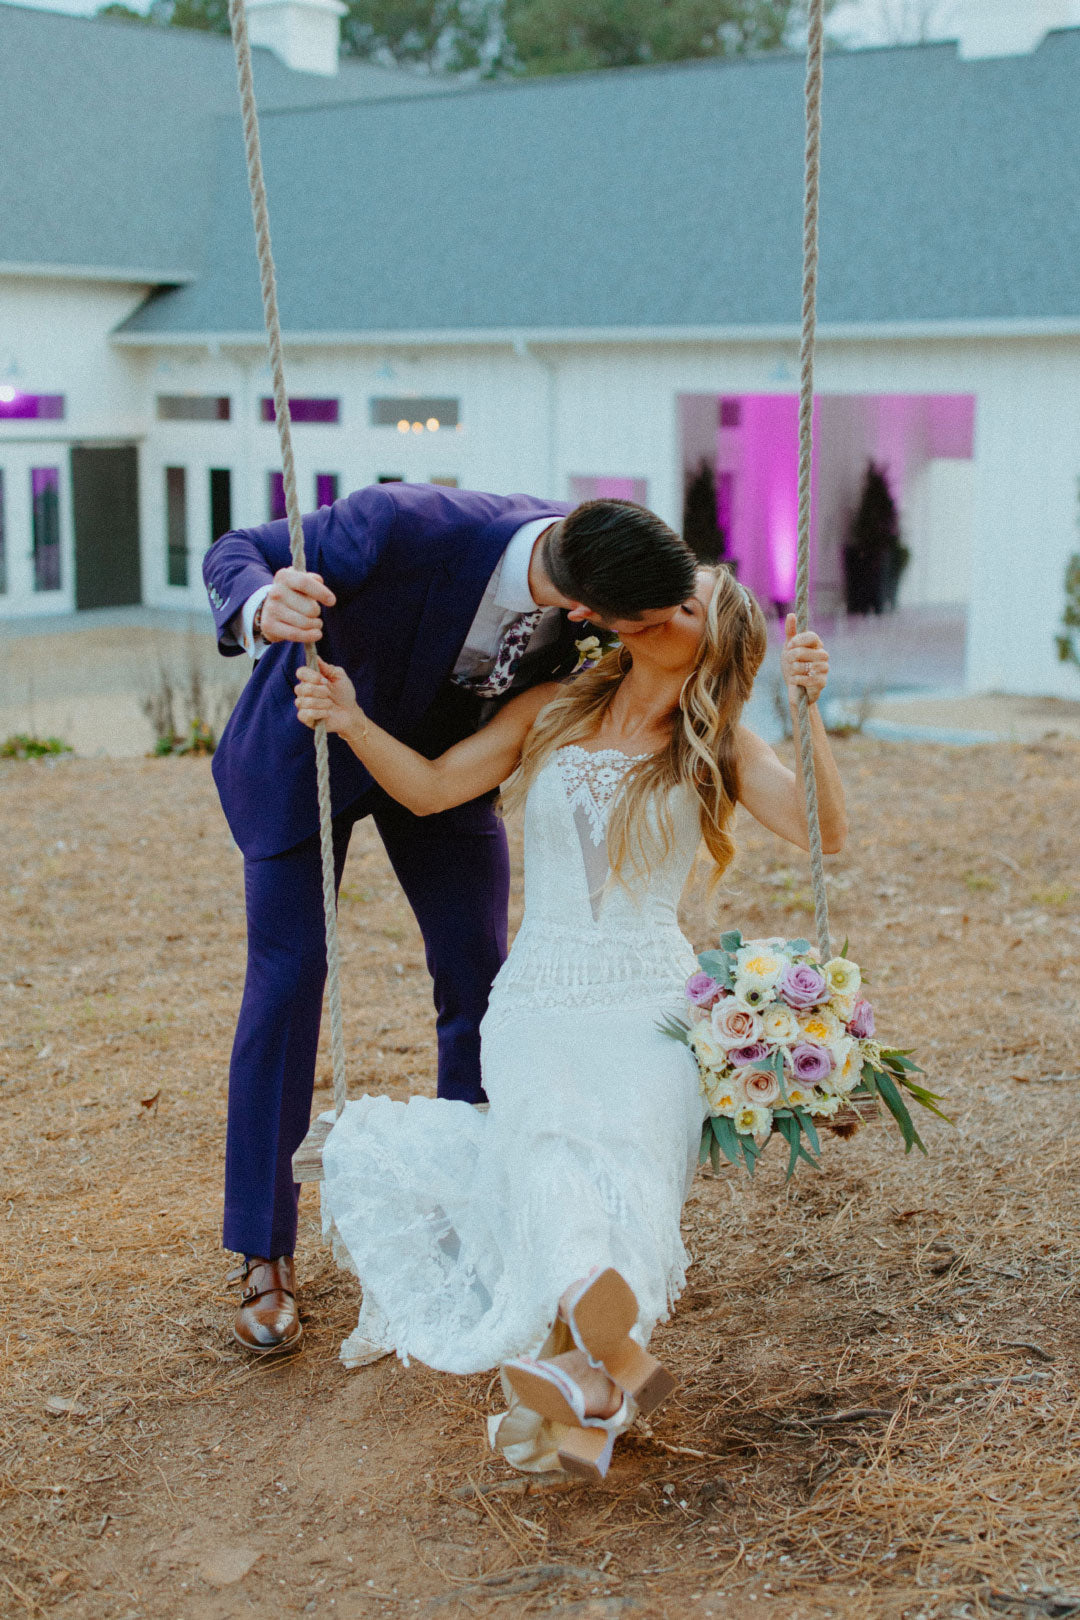 Groom Kisses bride while on swing